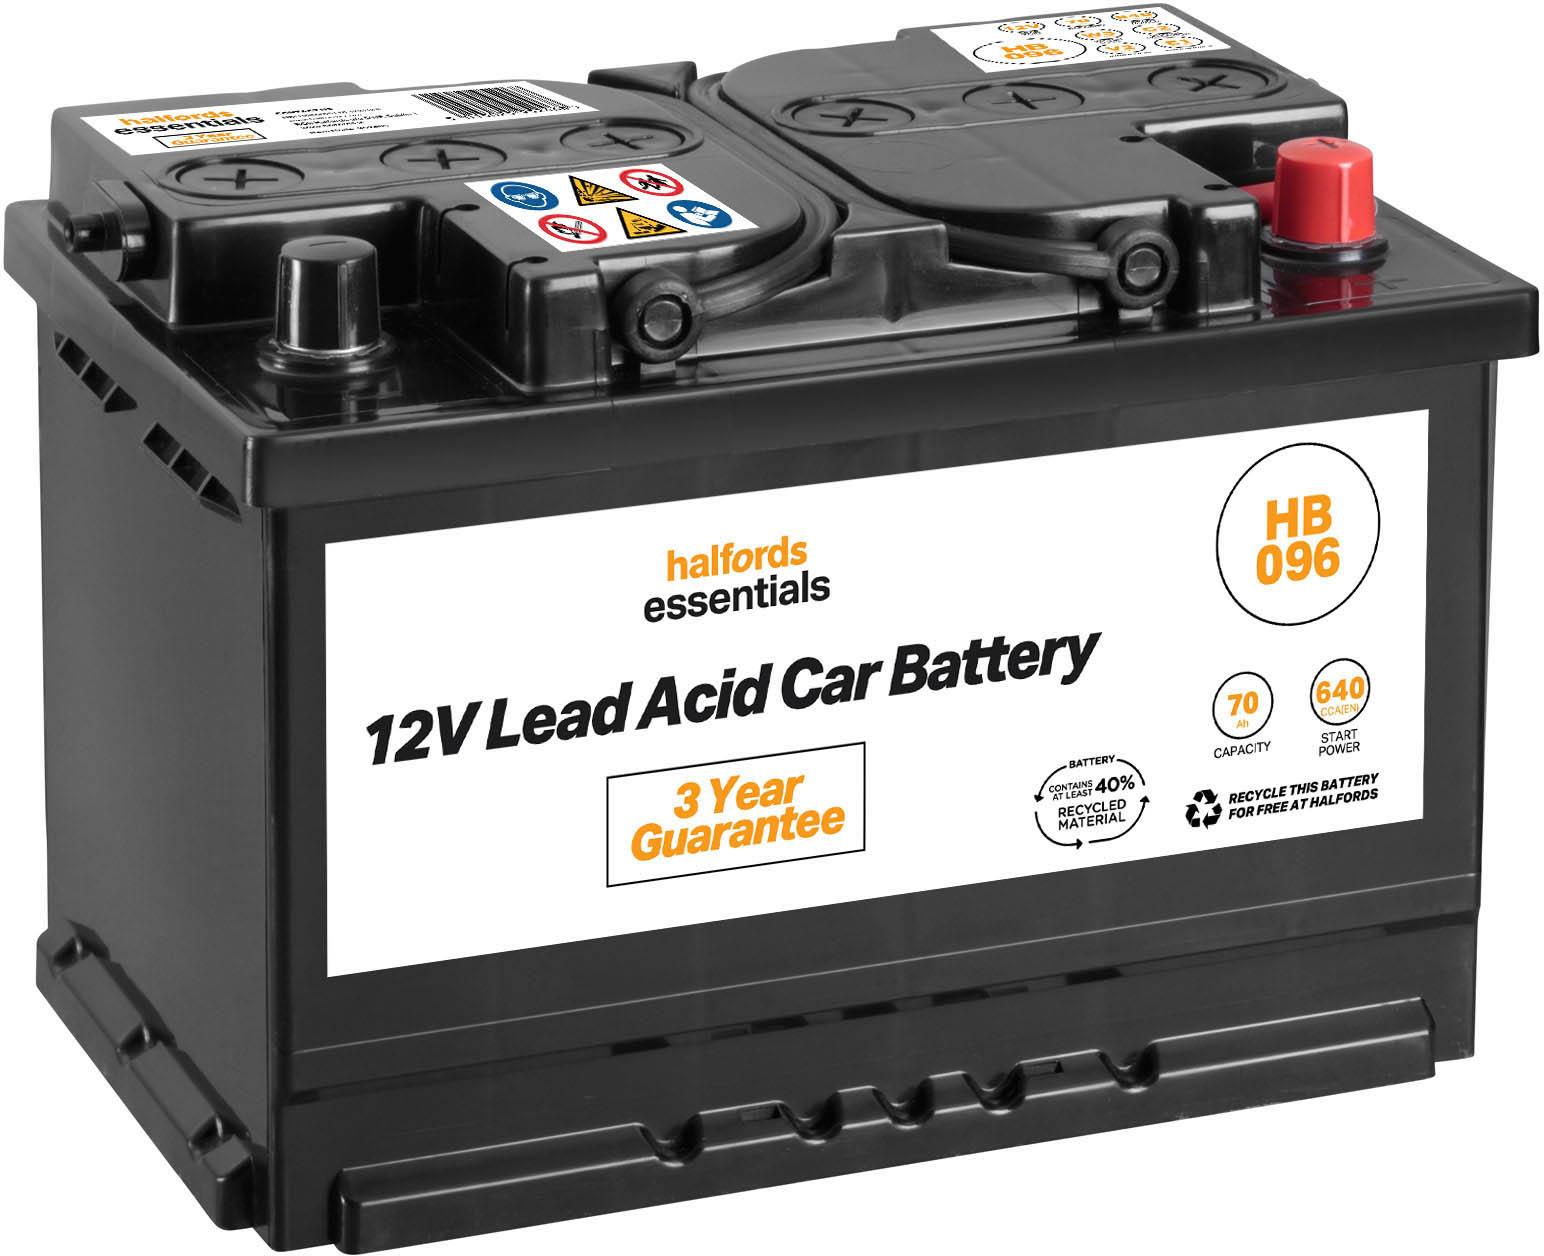 Halfords Hb096 Lead Acid 12V Car Battery 3 Year Guarantee